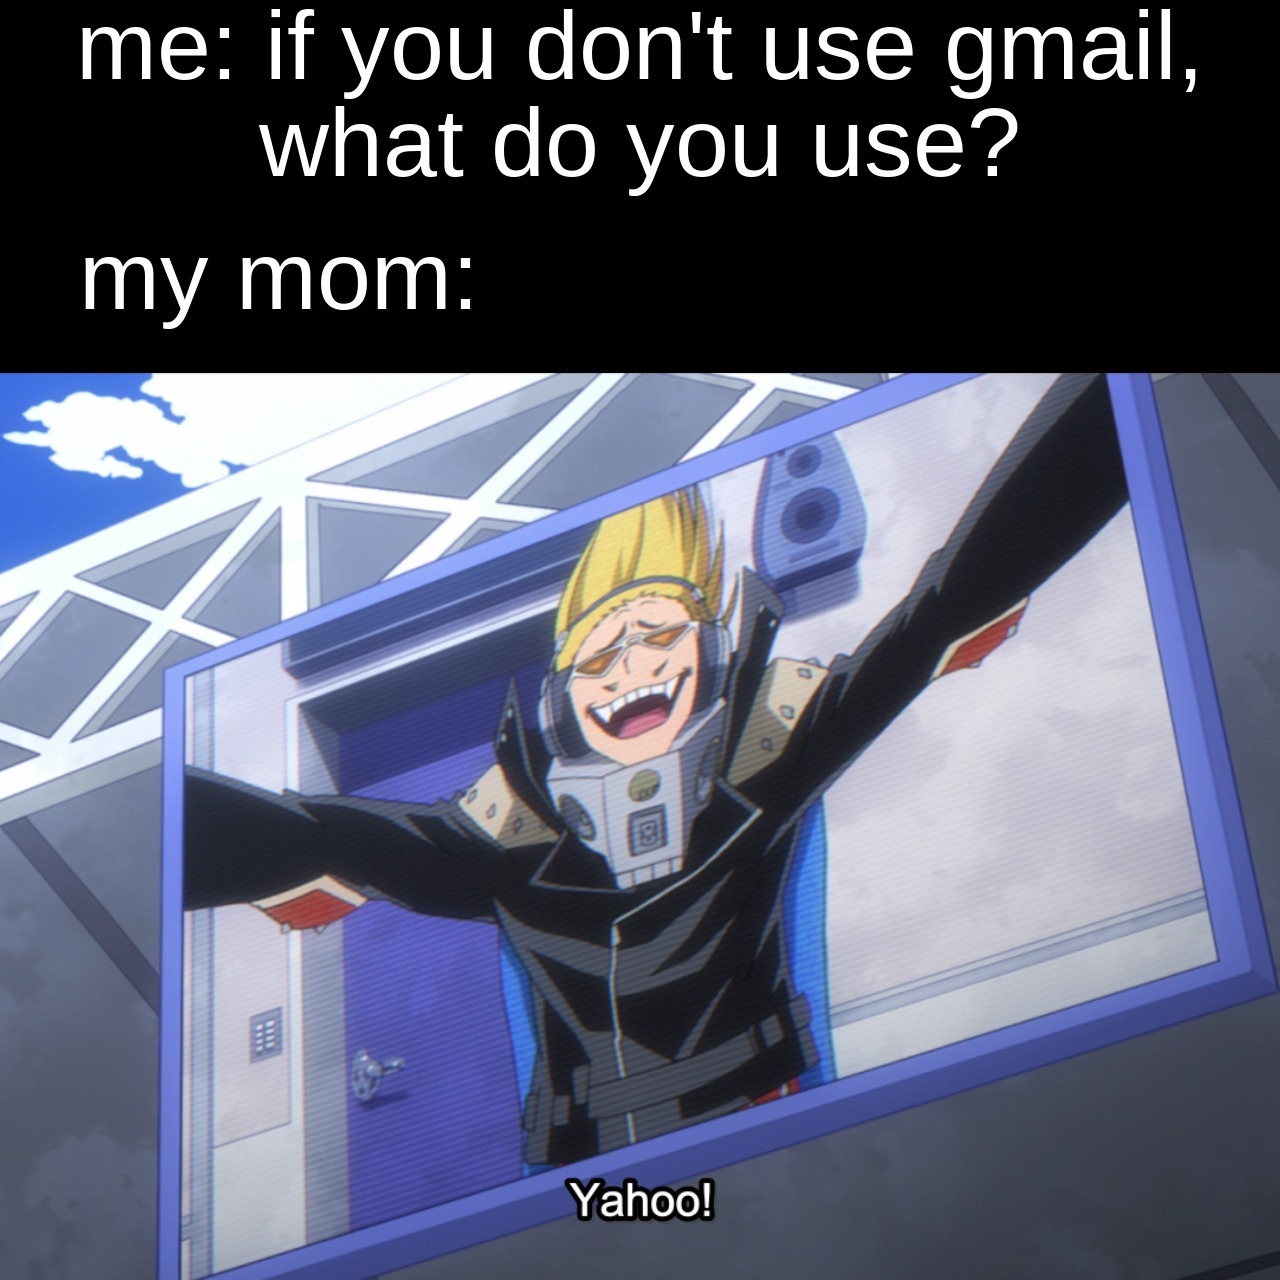 just use gmail, mom. - meme